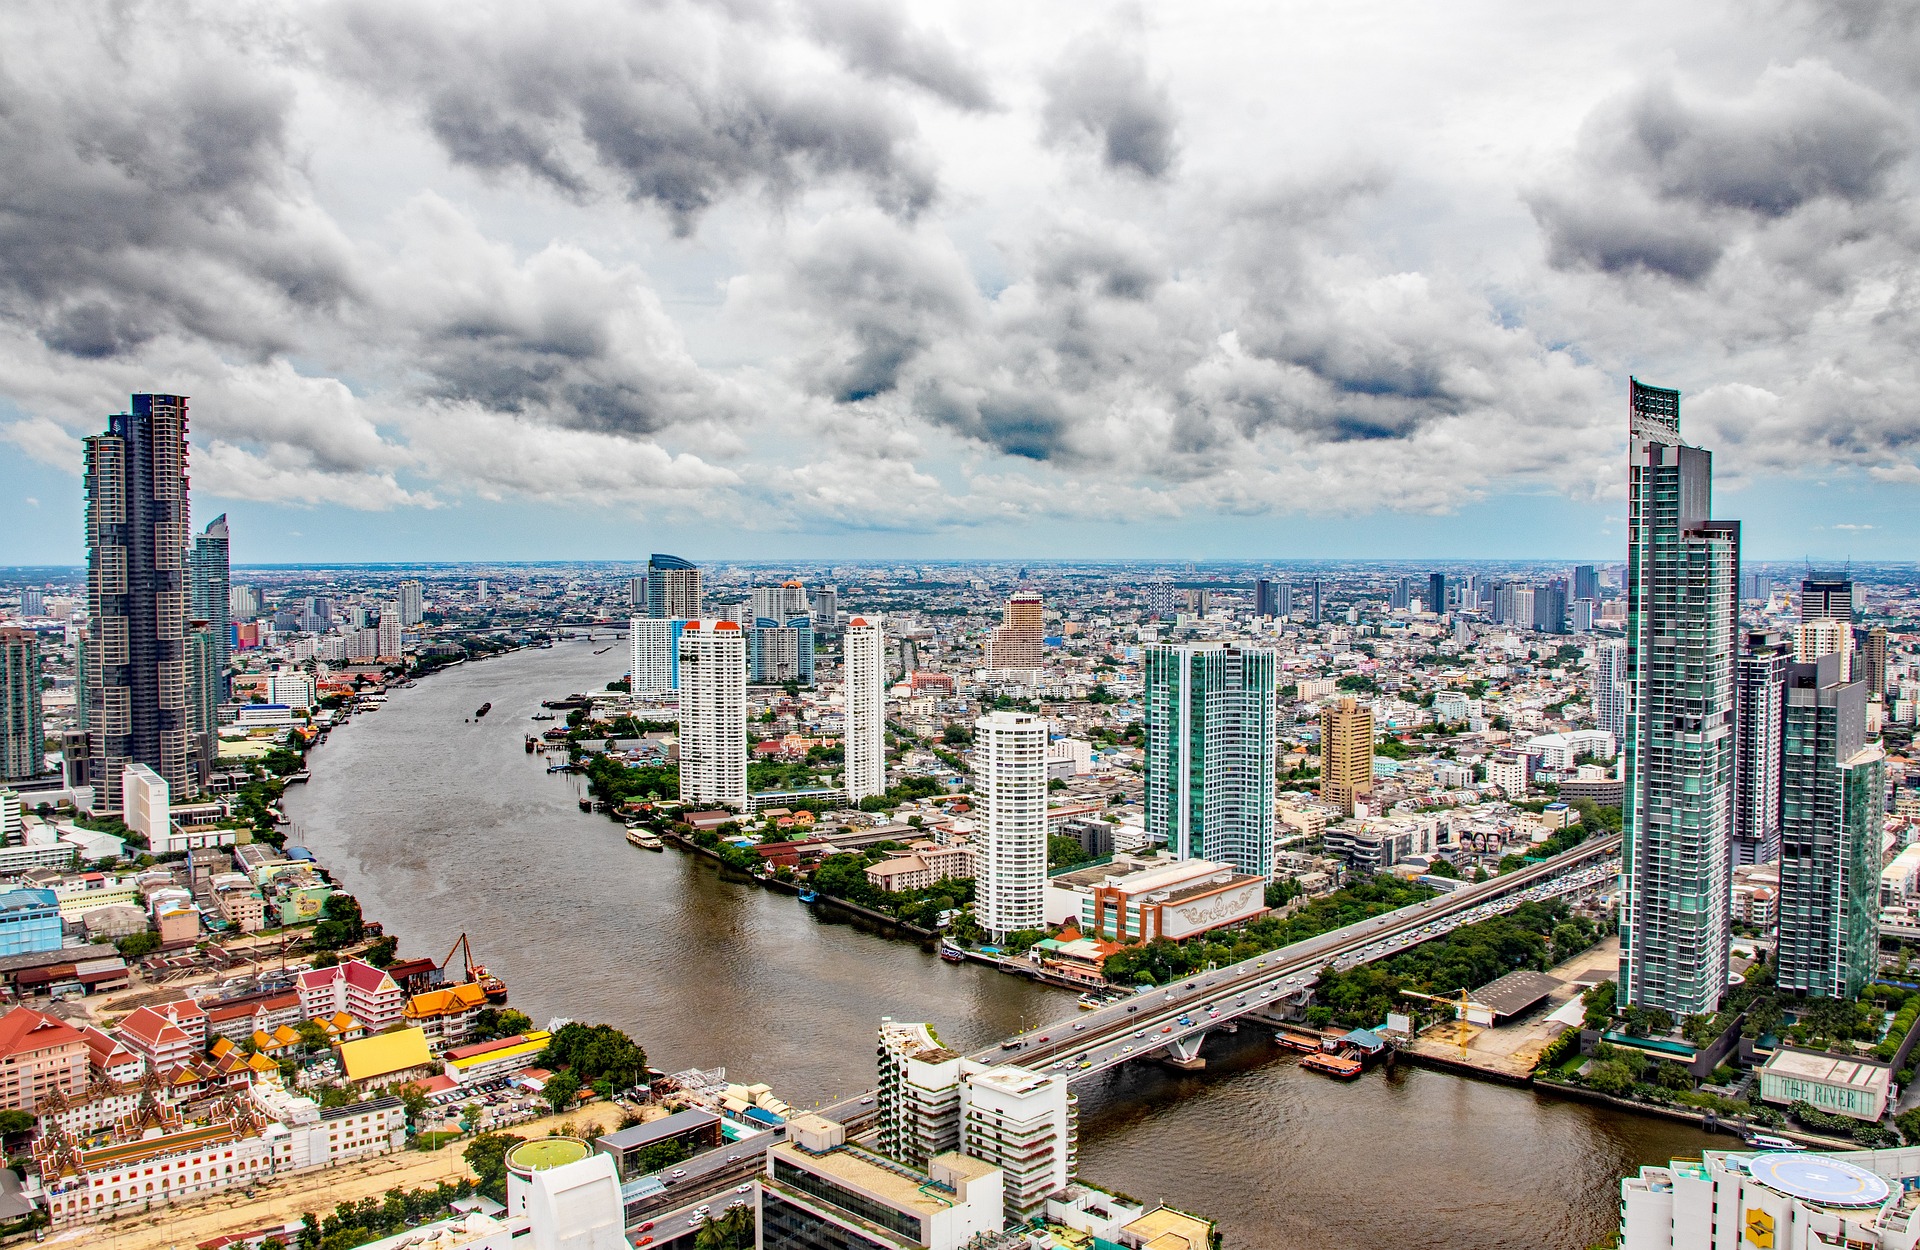 off peak season travel tips in Bangkok Thailand by GlobalGuide.info